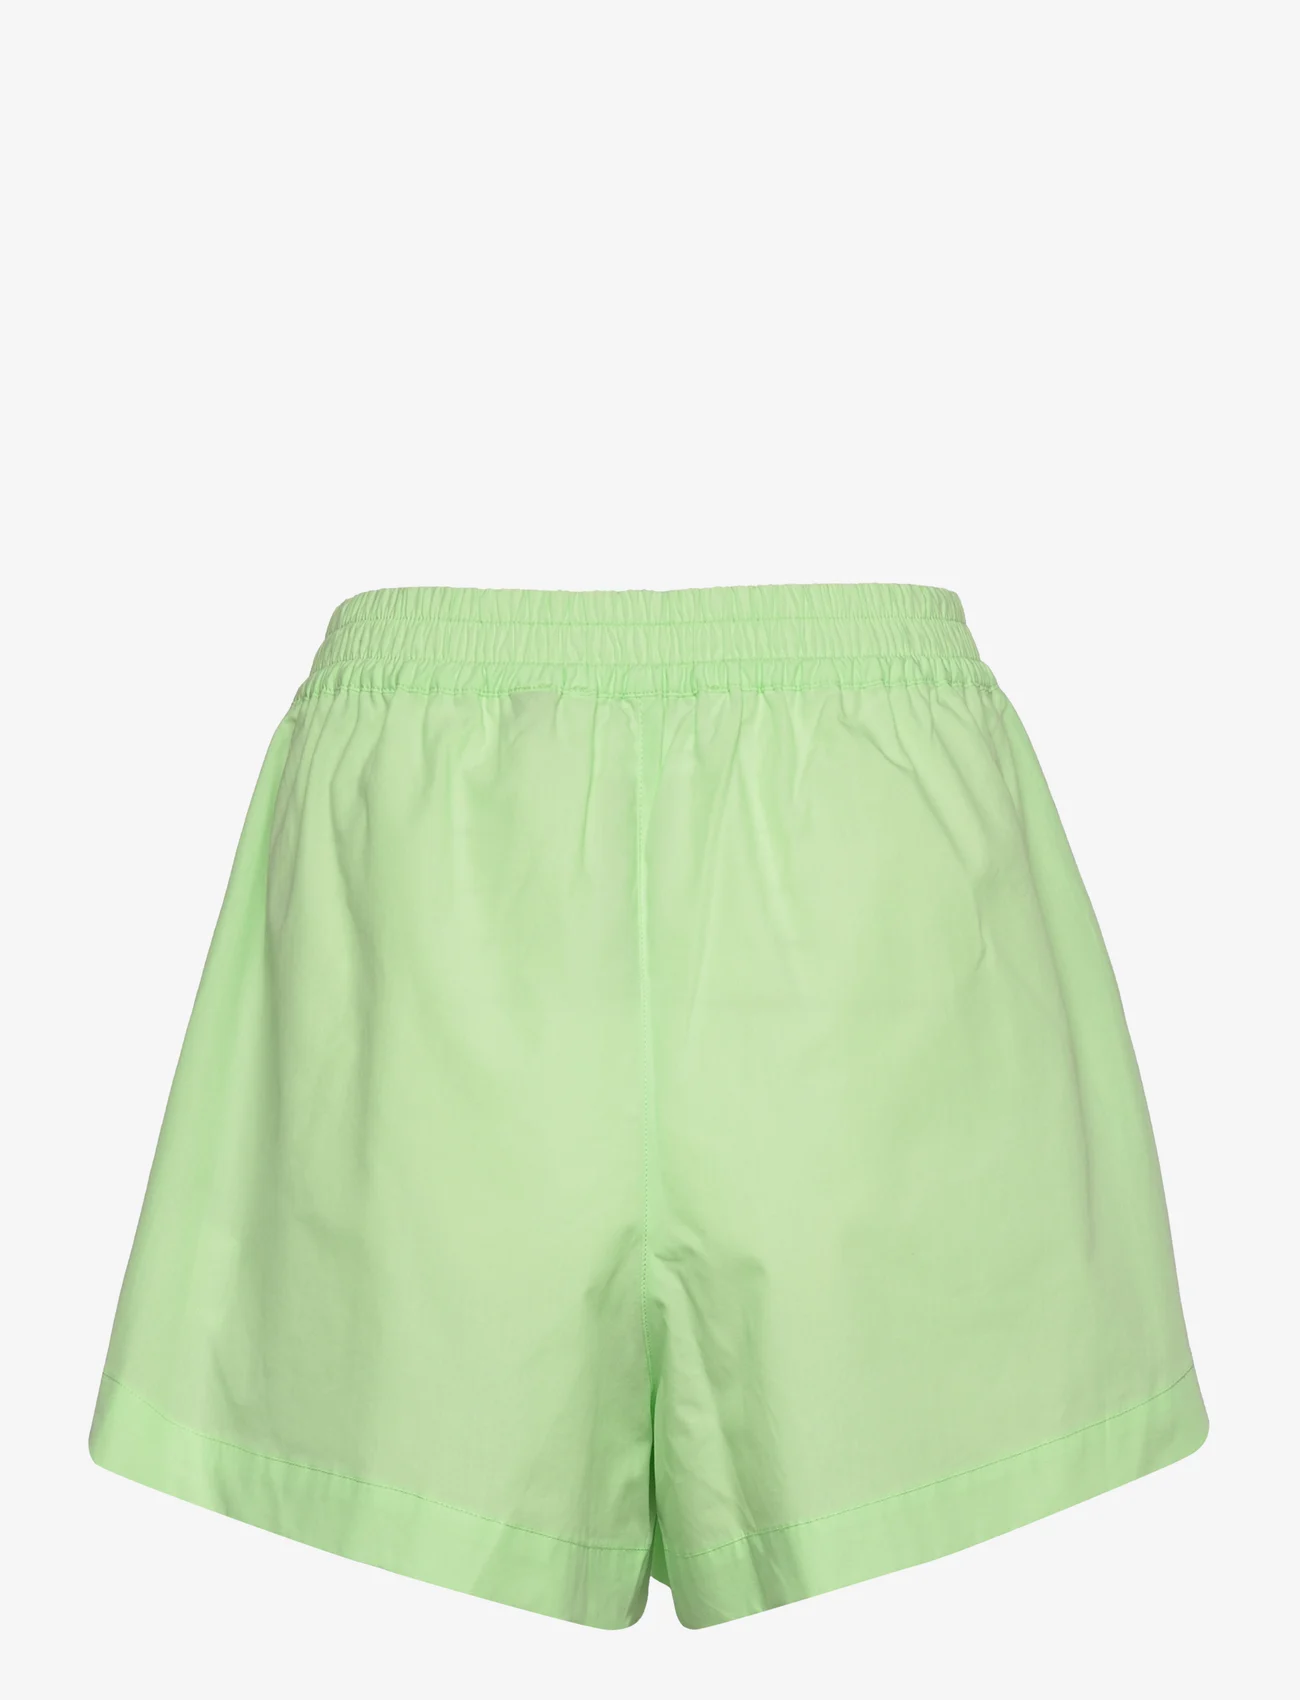 ROTATE Birger Christensen - Ponisan Shorts - casual shorts - paradise green - 1